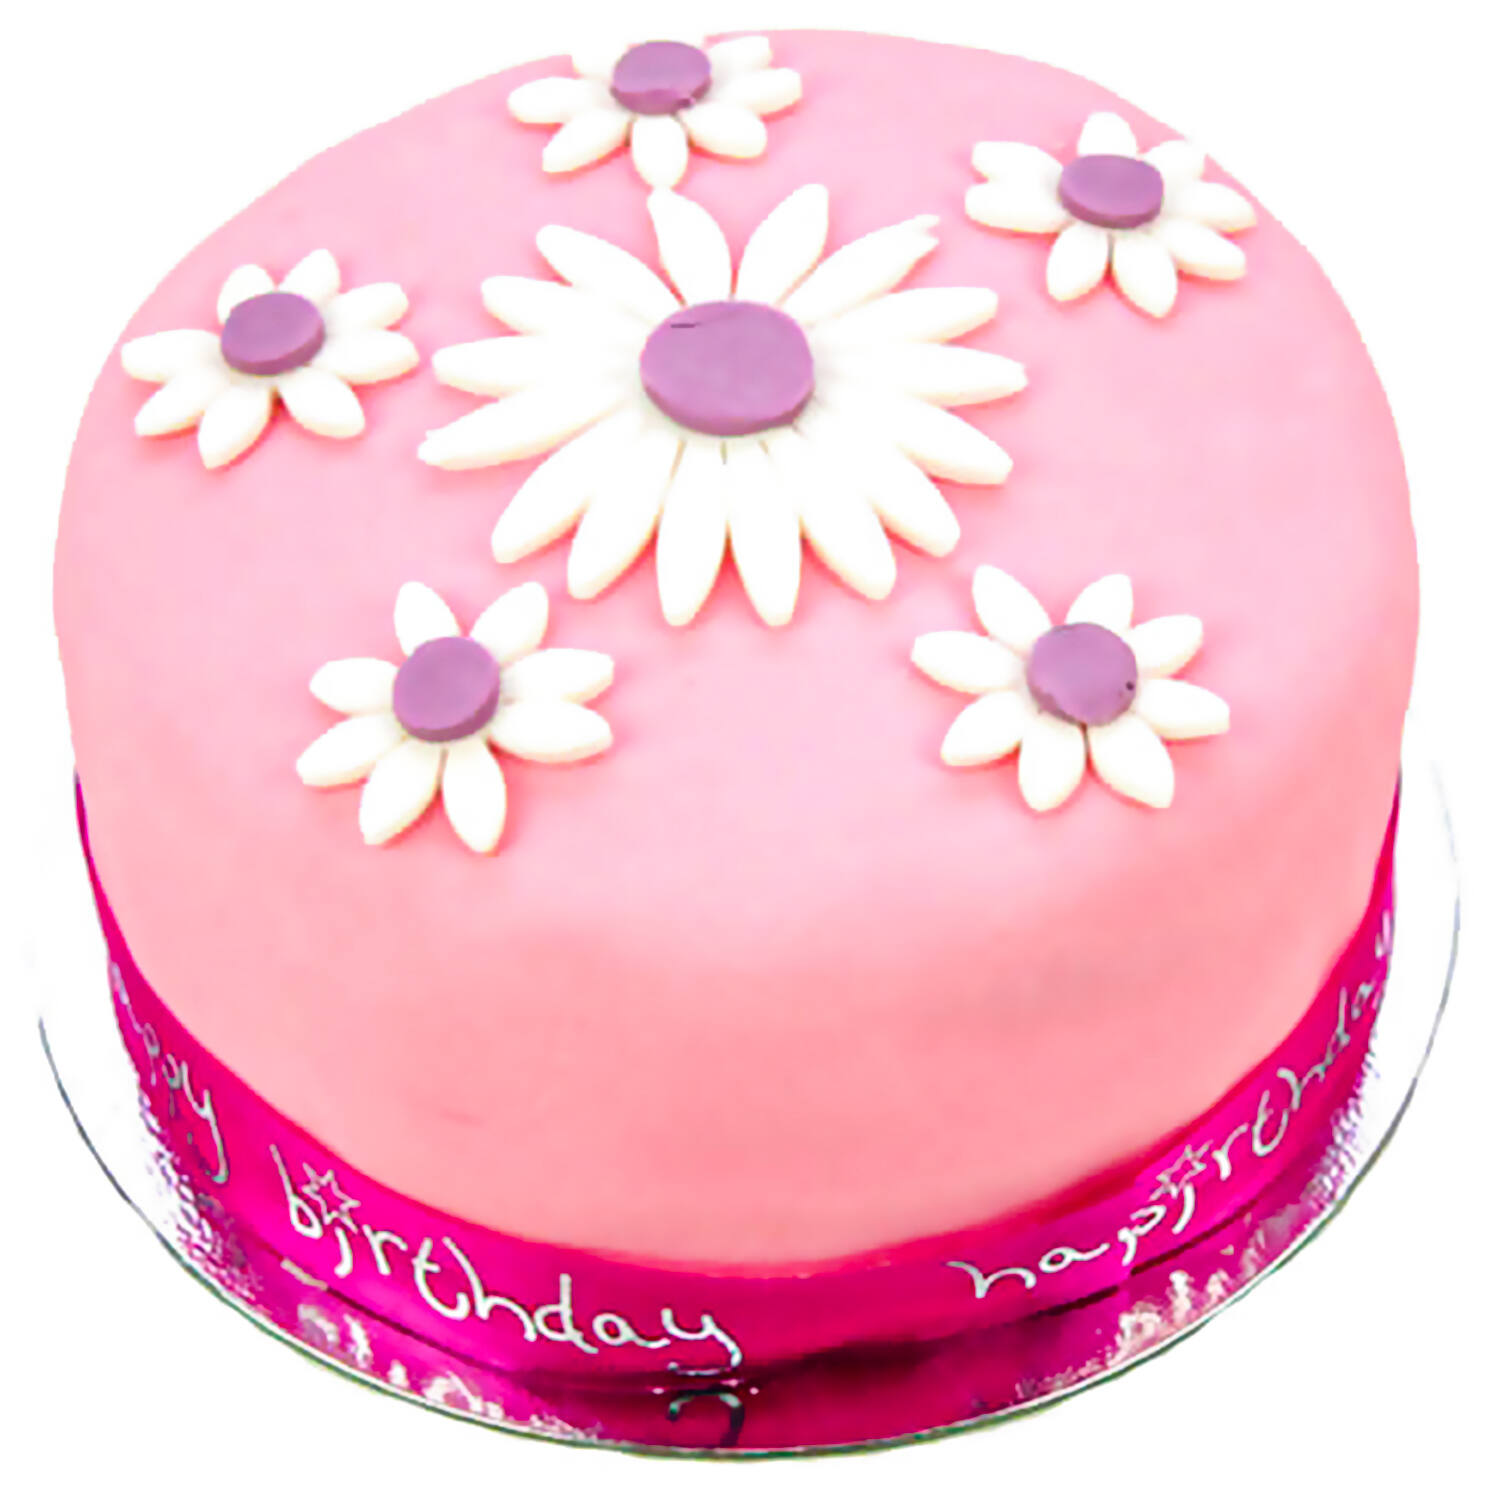 Pinky birthday song - Cakes - Happy Birthday PINKY - YouTube